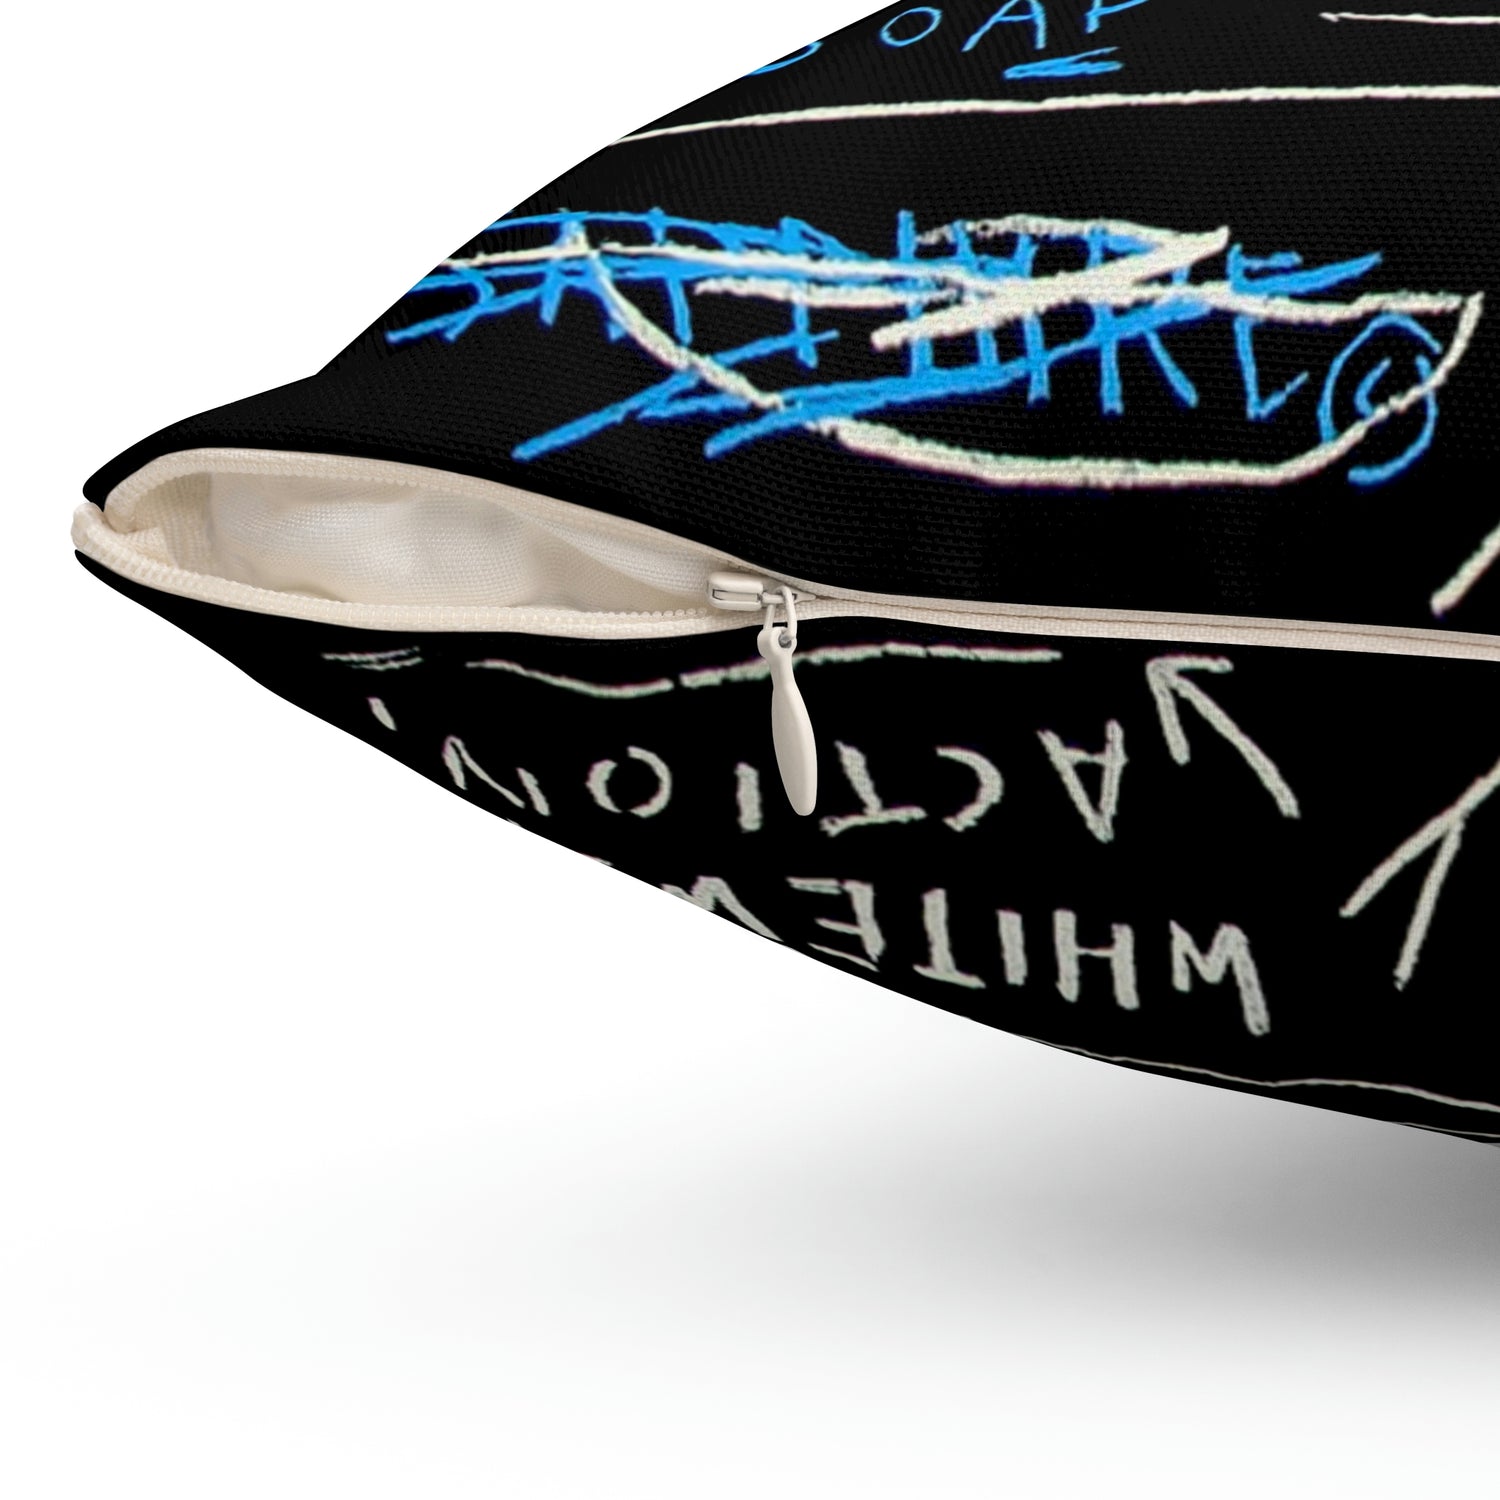 Jean-Michel Basquiat "Rinso" Artwork Square Throw Pillow